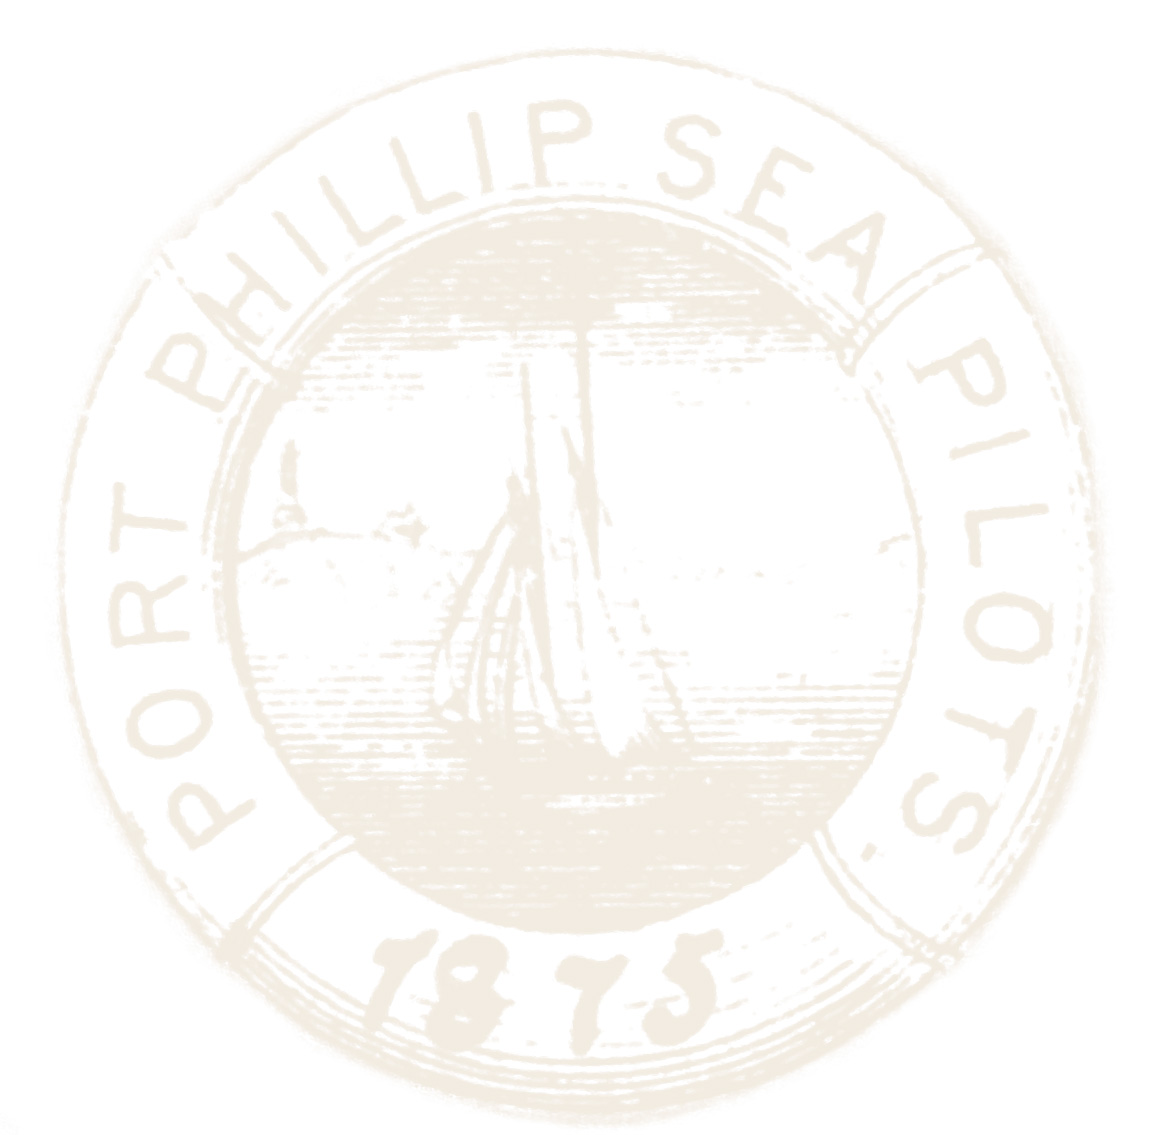 Historical Port Philip Sea Pilots logo